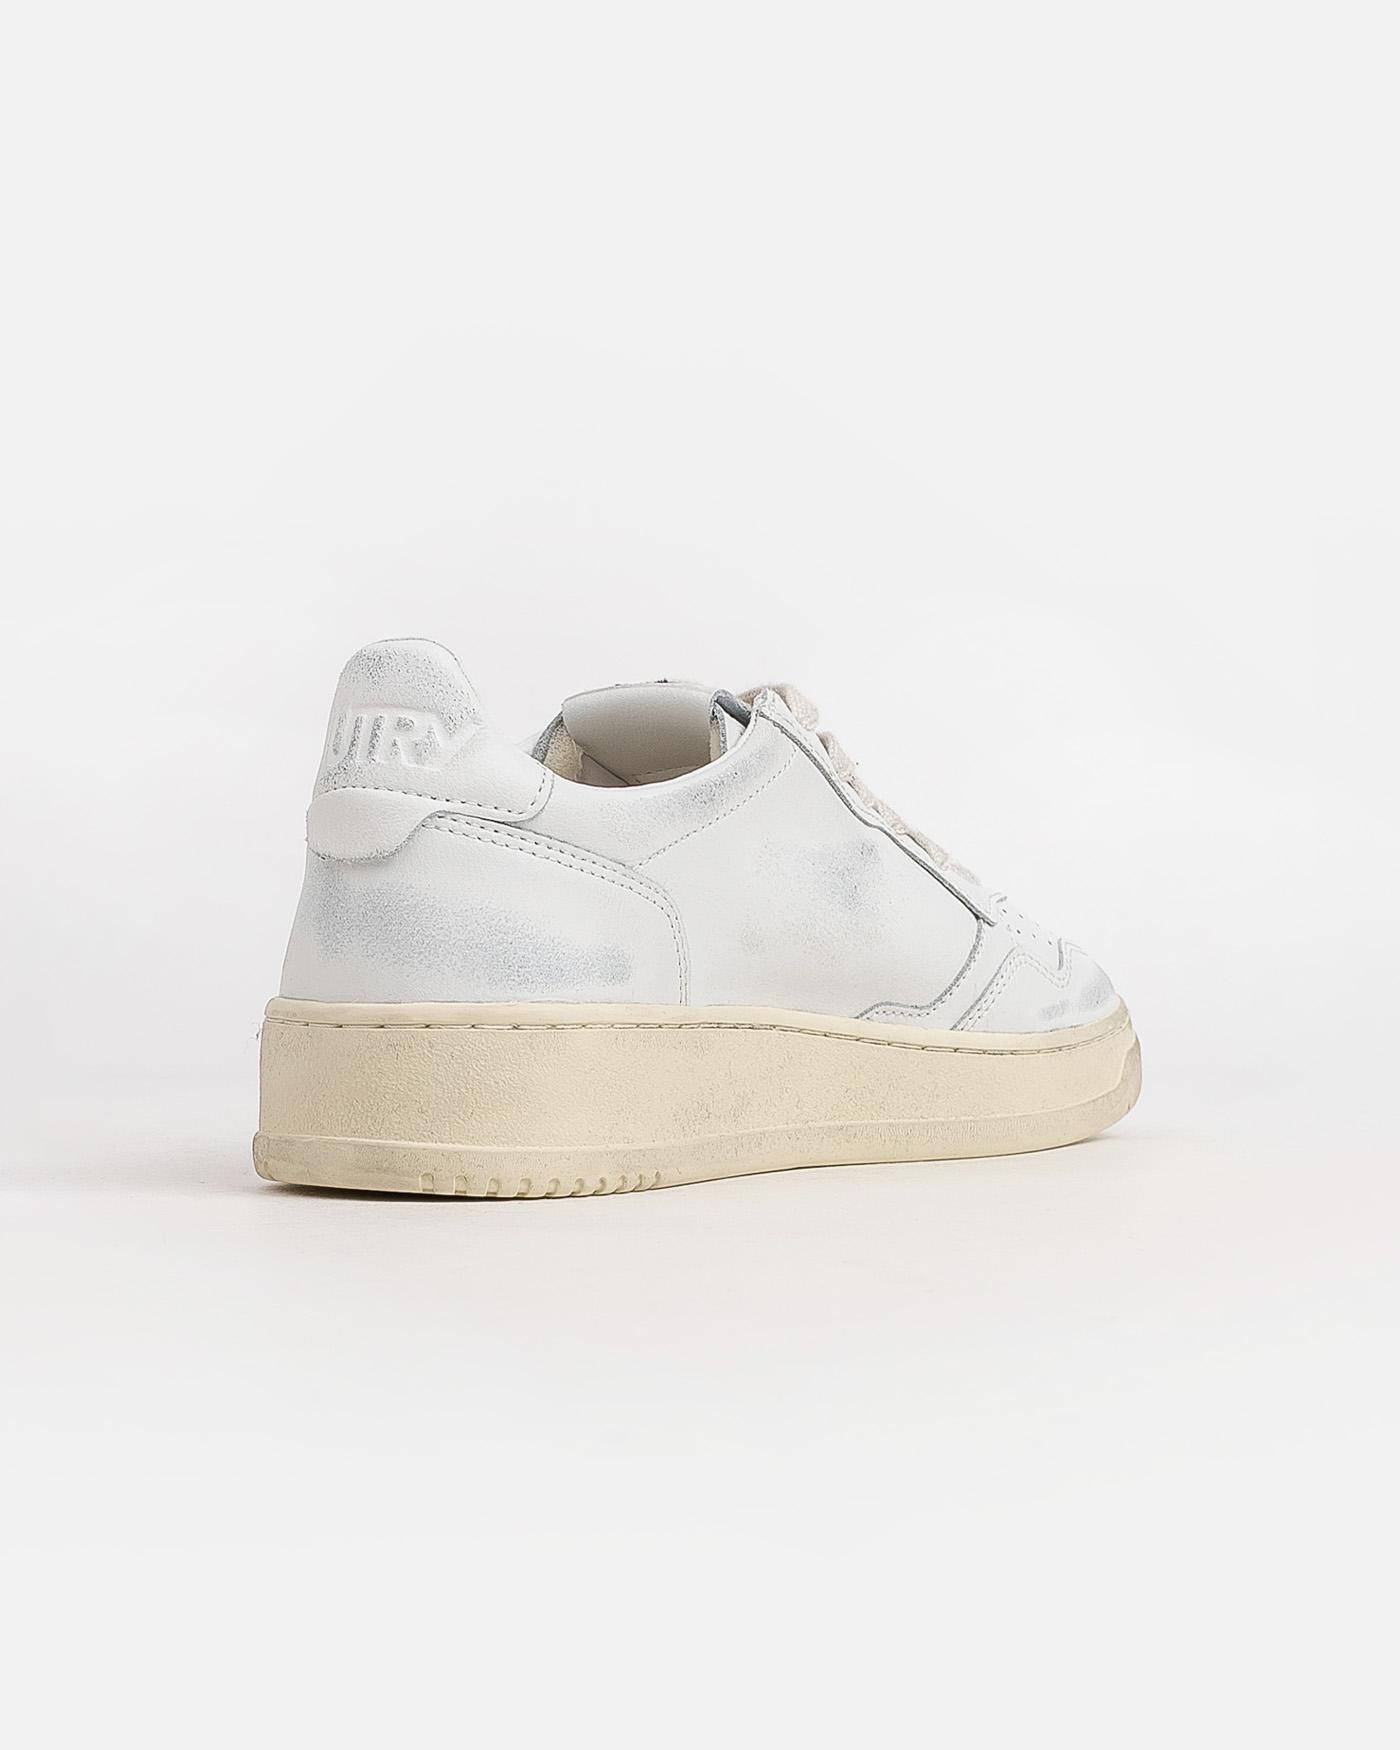 autry-zapatillas-aulm-ol01-sneakers-white-blancas-2